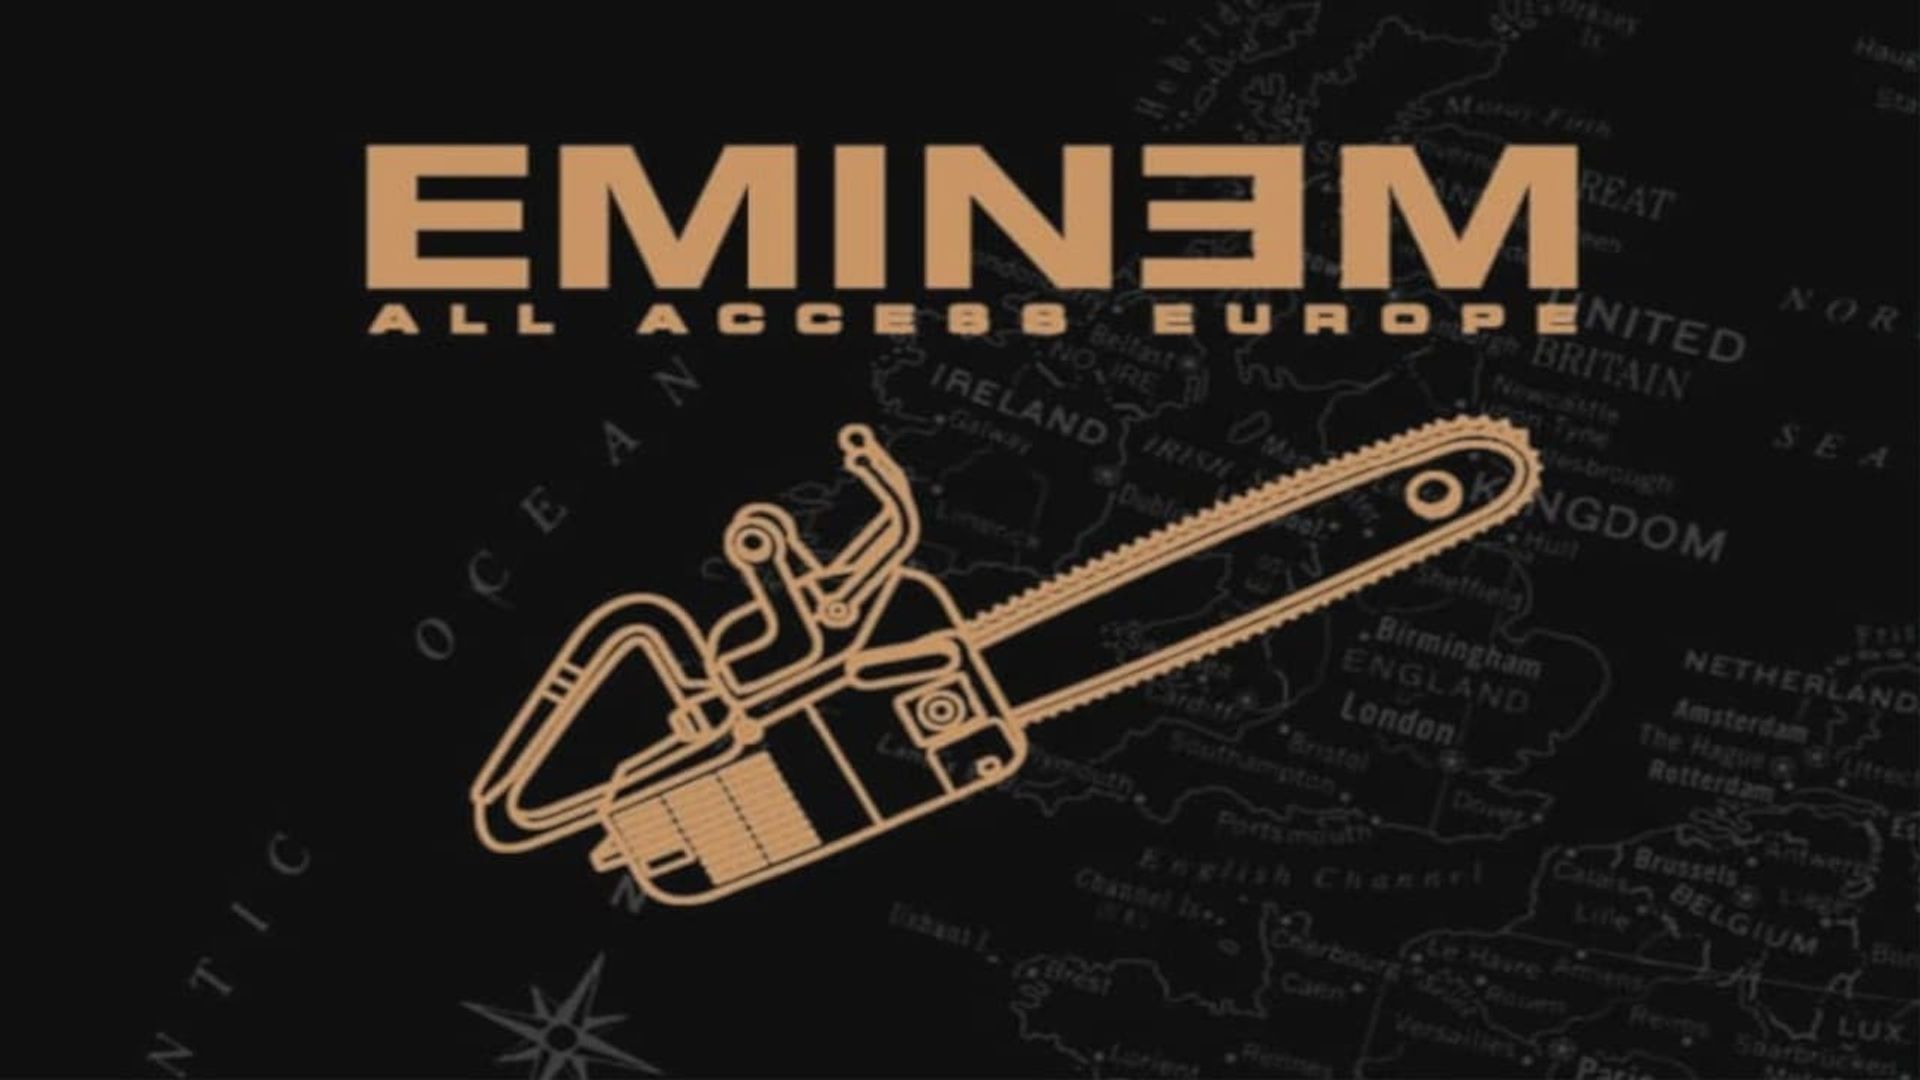 Eminem: All Access Europe background